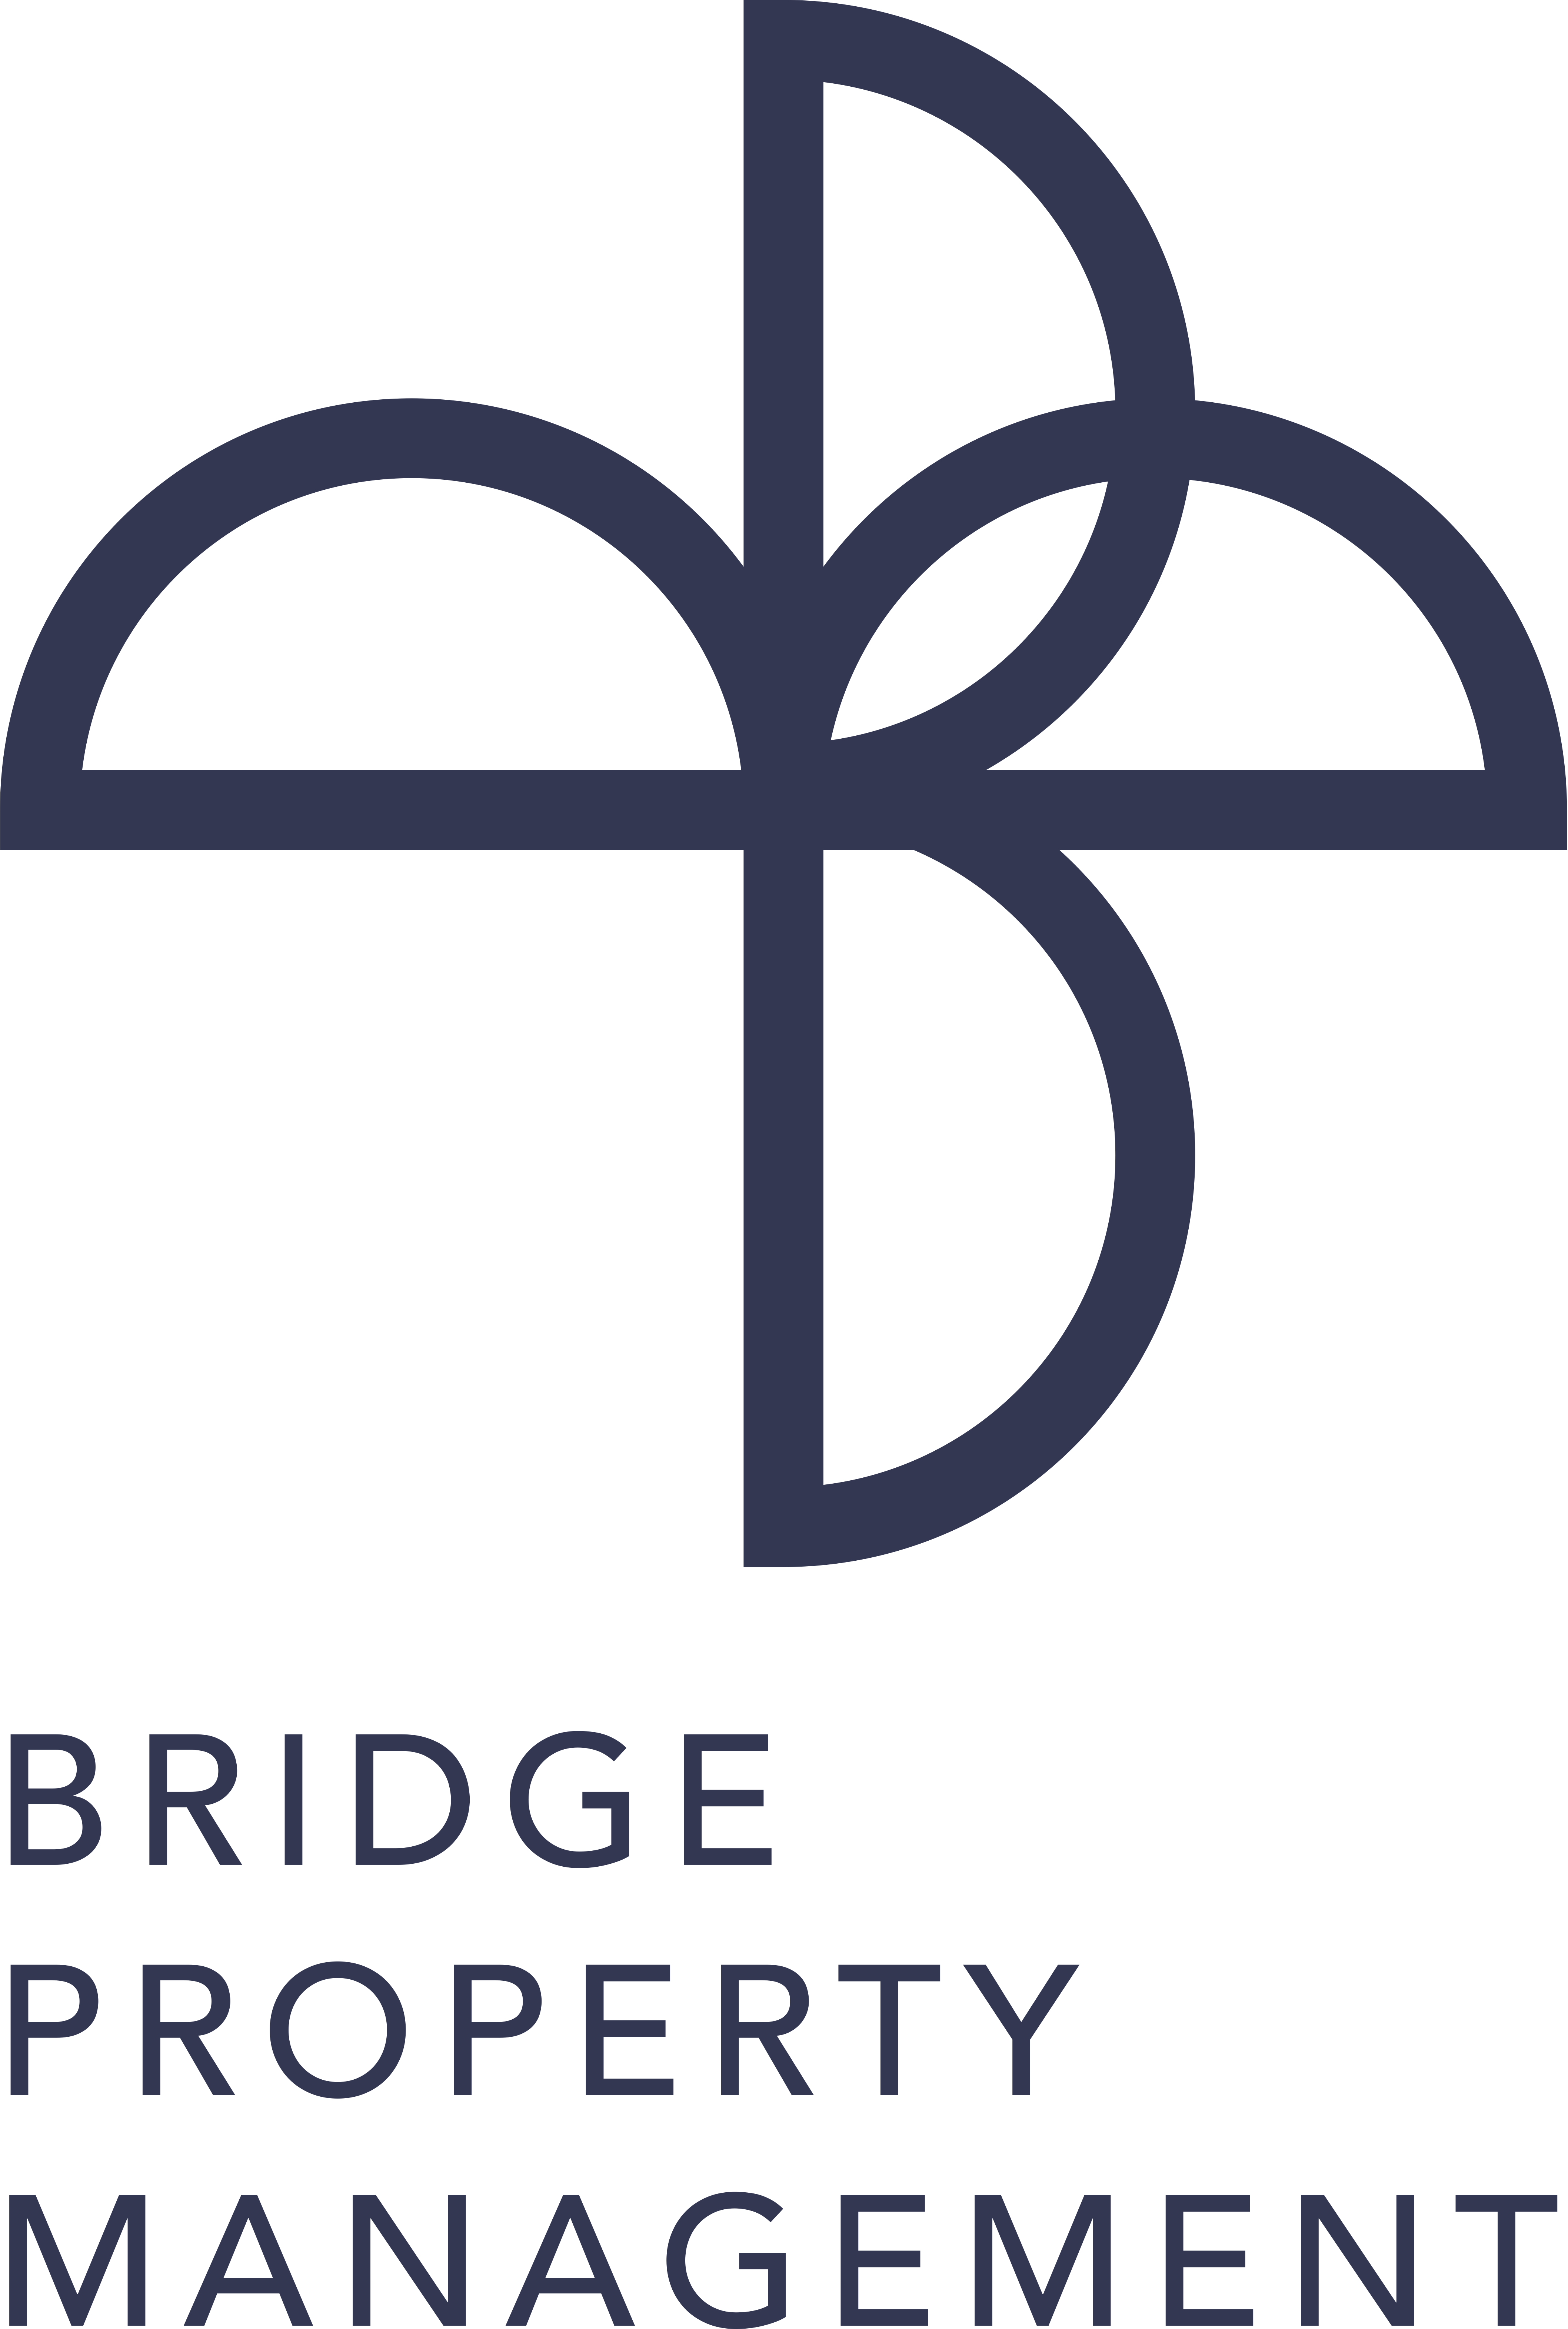 Bridge Property Management - New York logo